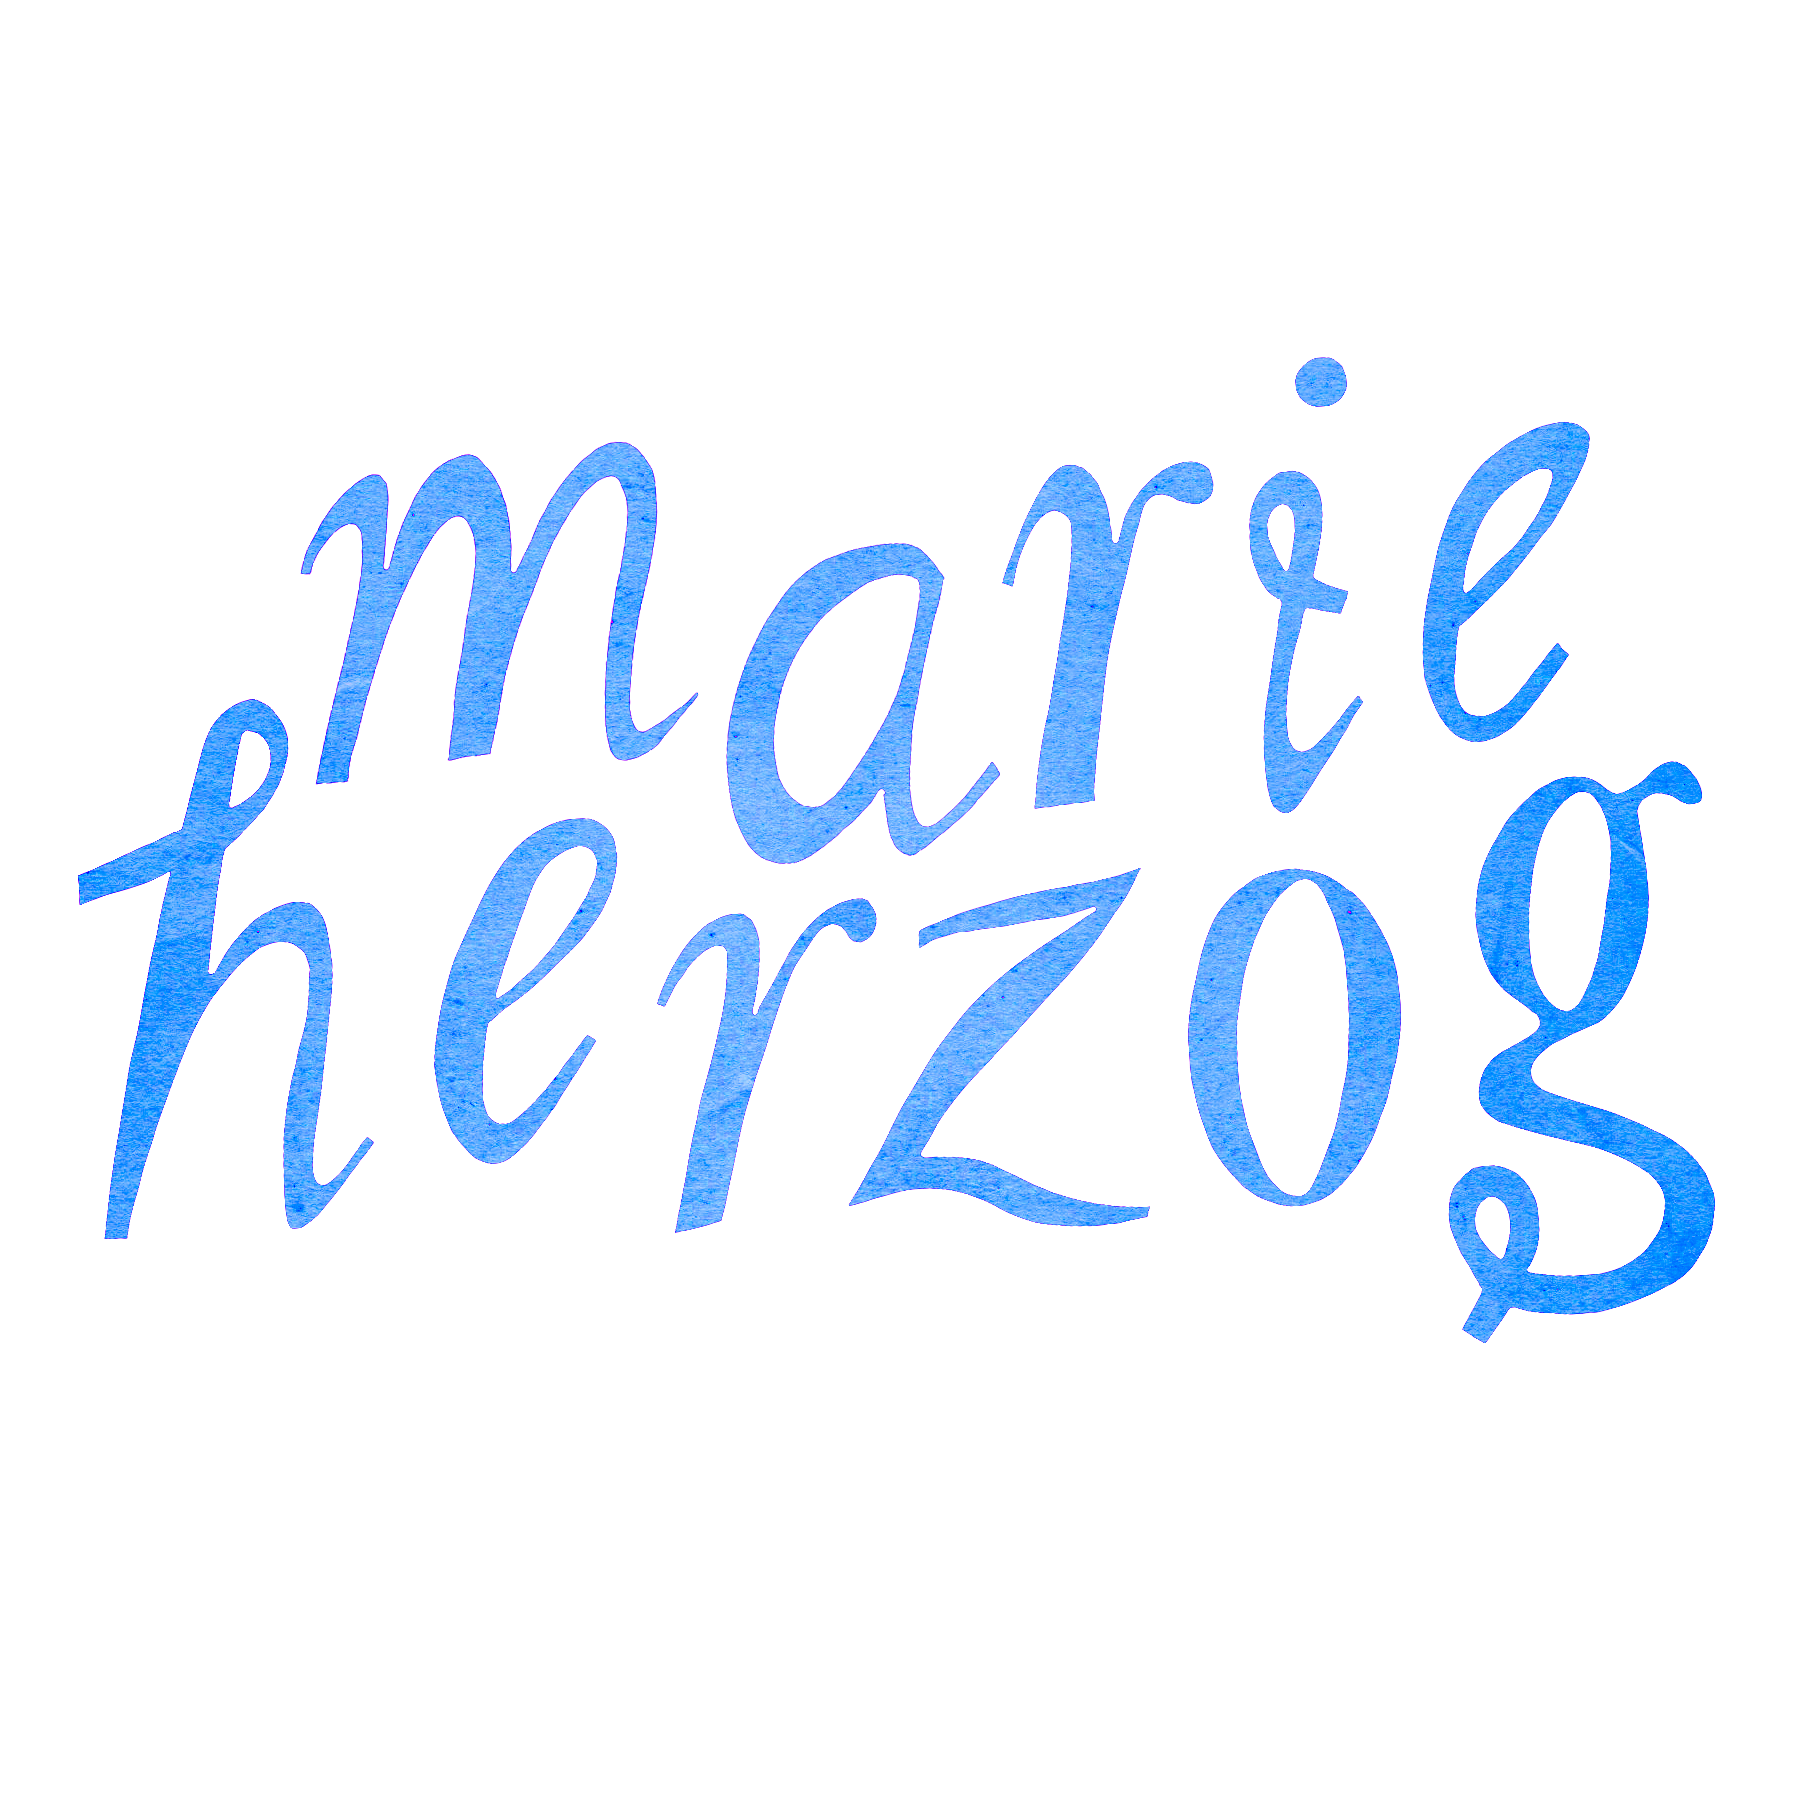 Marie Herzog